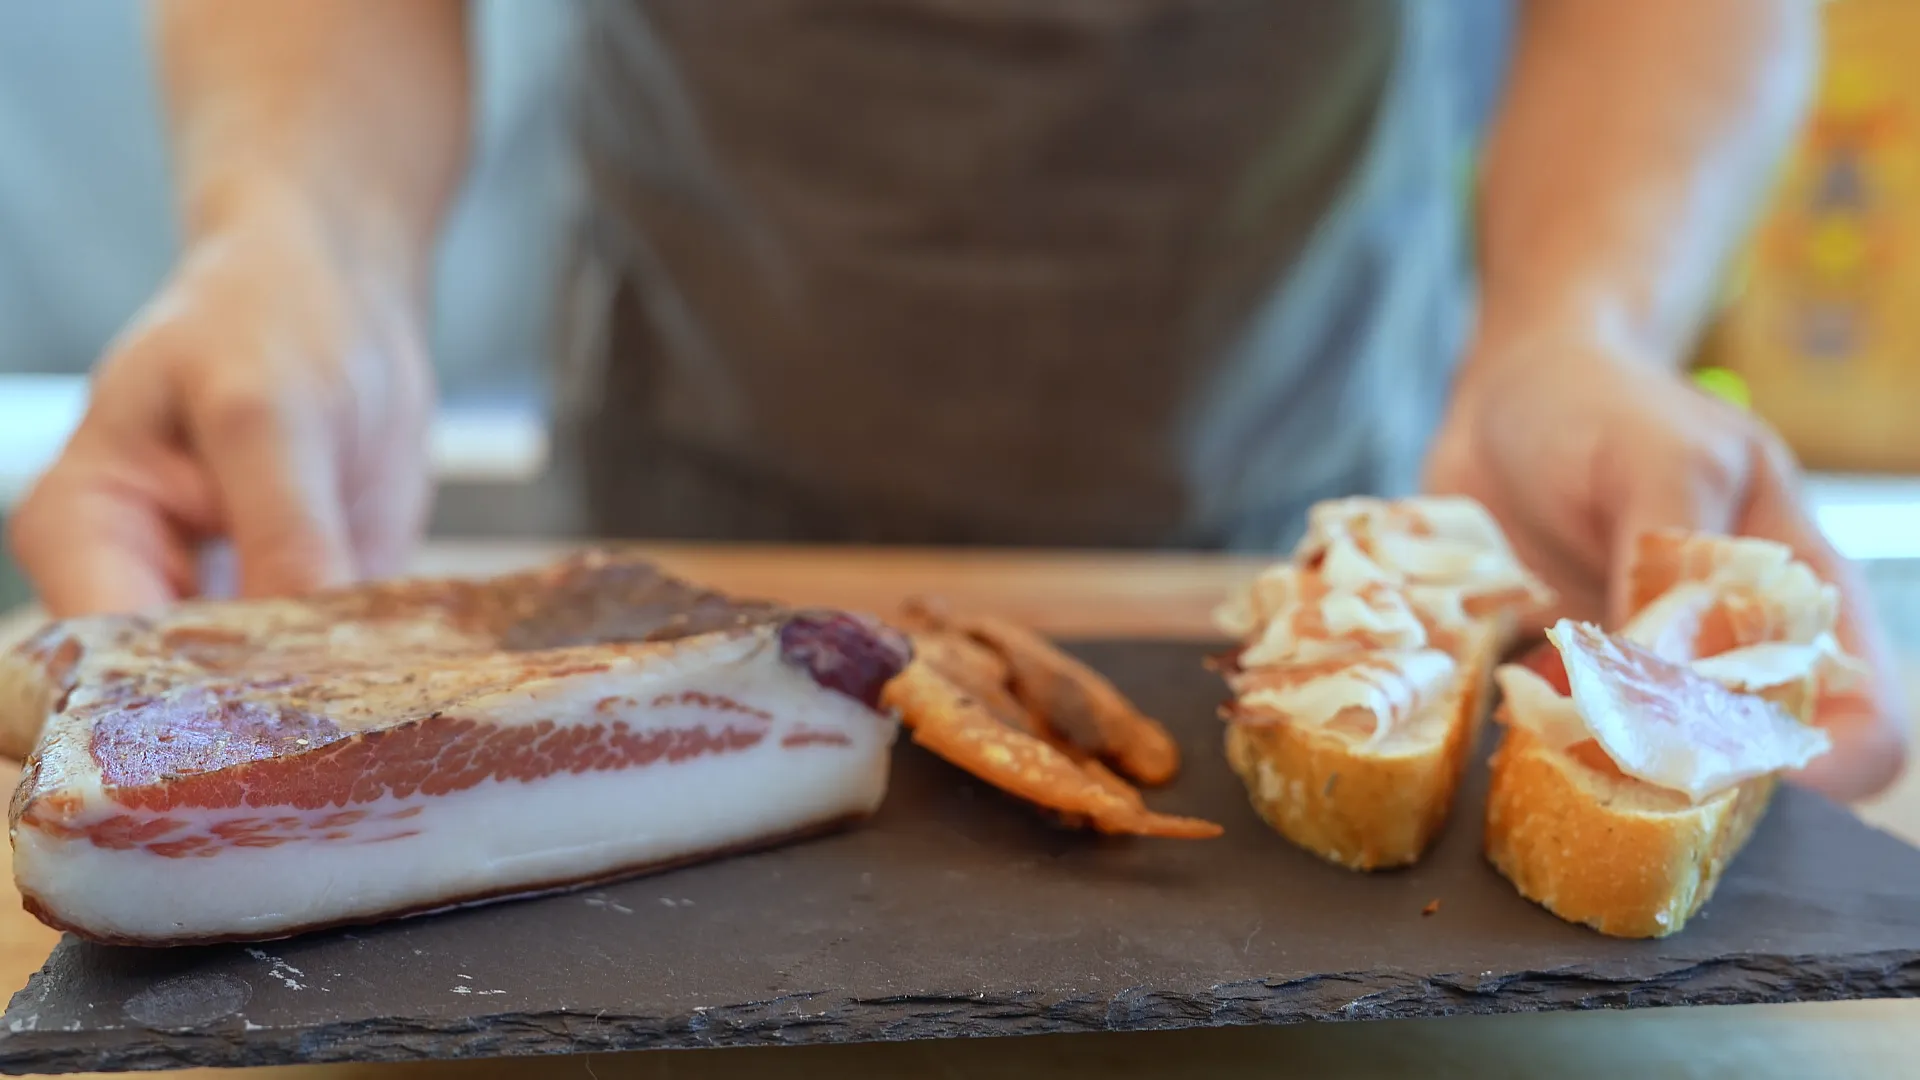 Guanciale - Super delicious Italian pork cheek bacon